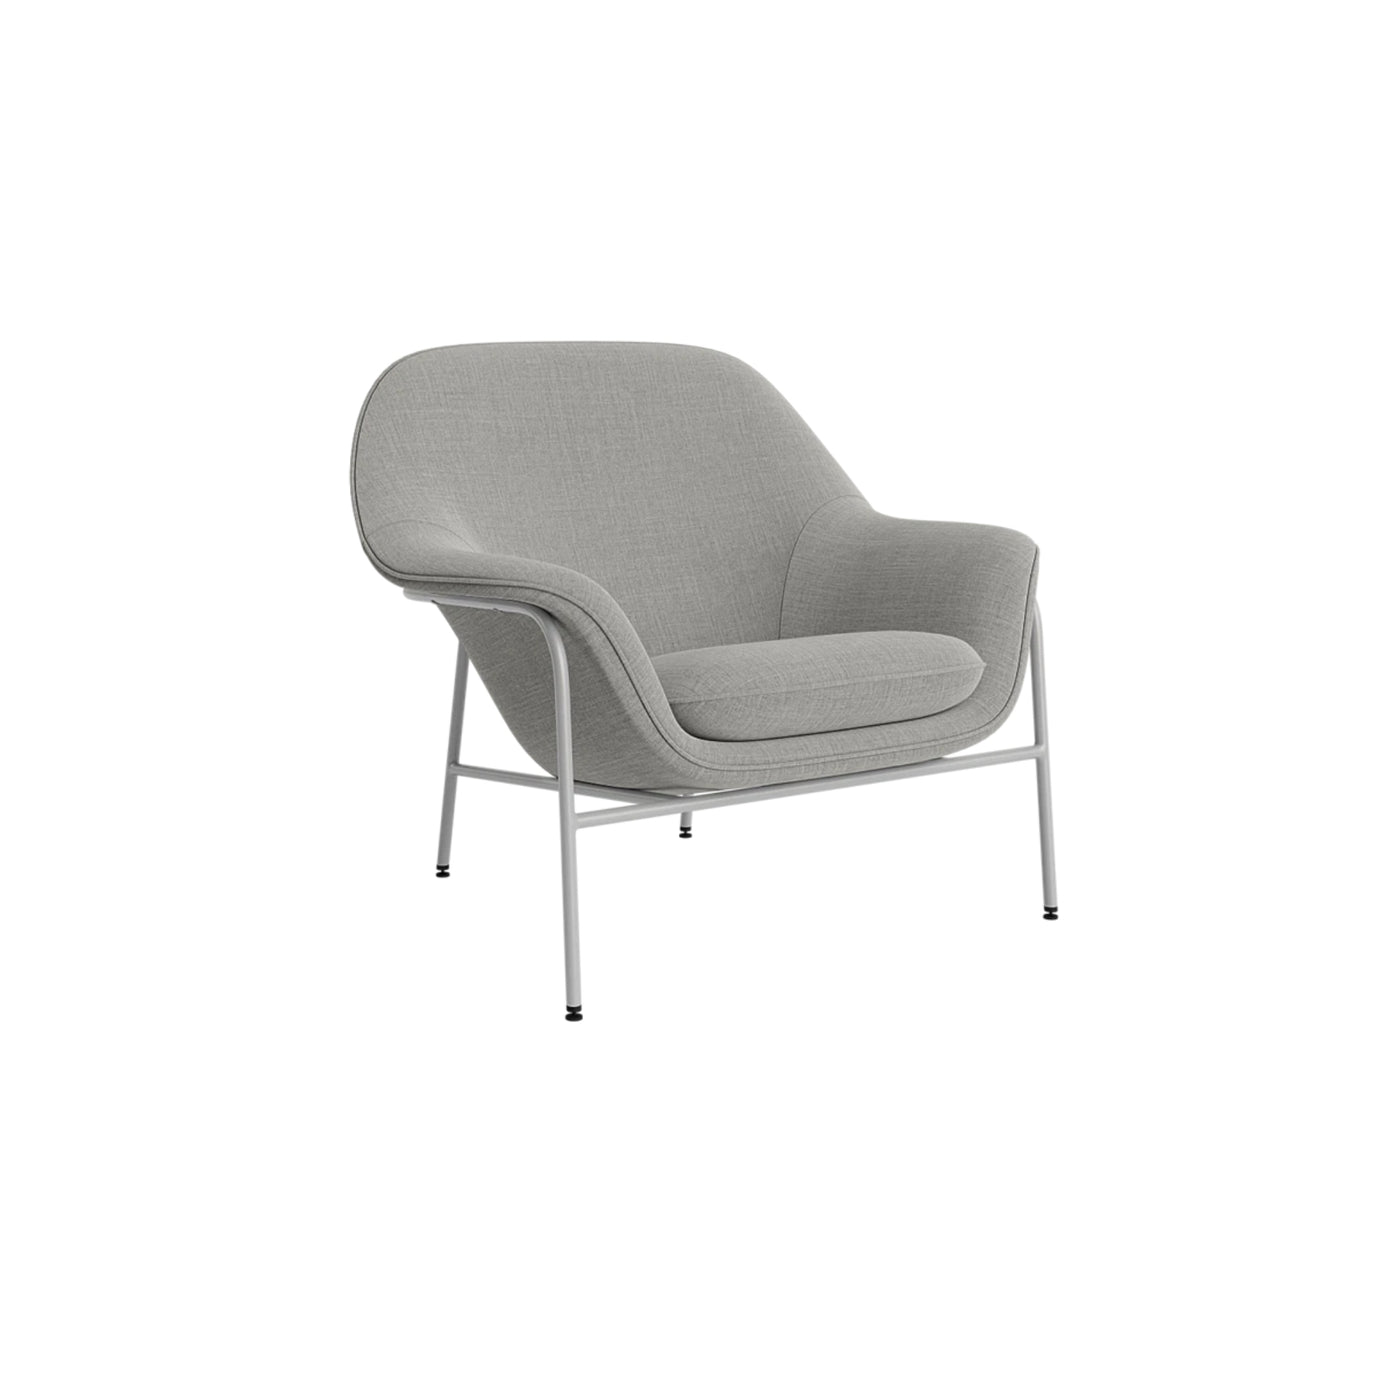 Normann Copenhagen Drape Lounge Chair Steel at someday designs. #colour_remix-133